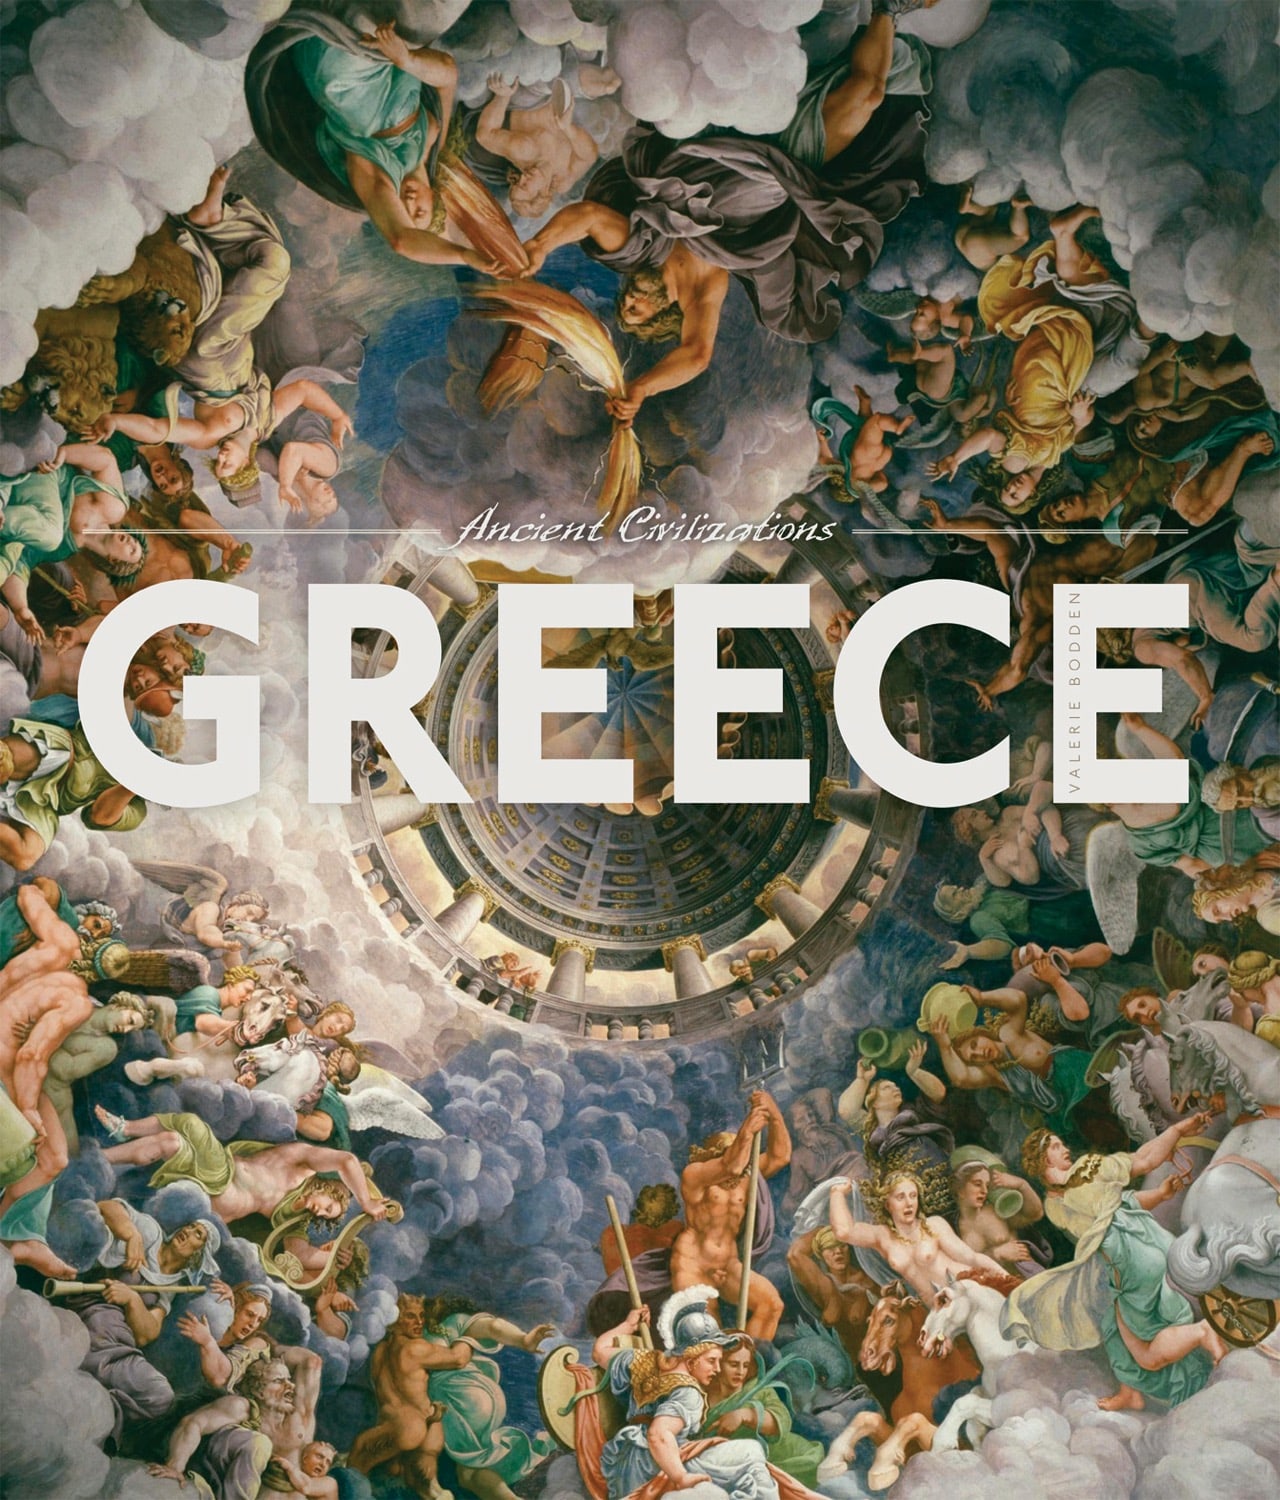 Ancient Civilizations: Greece